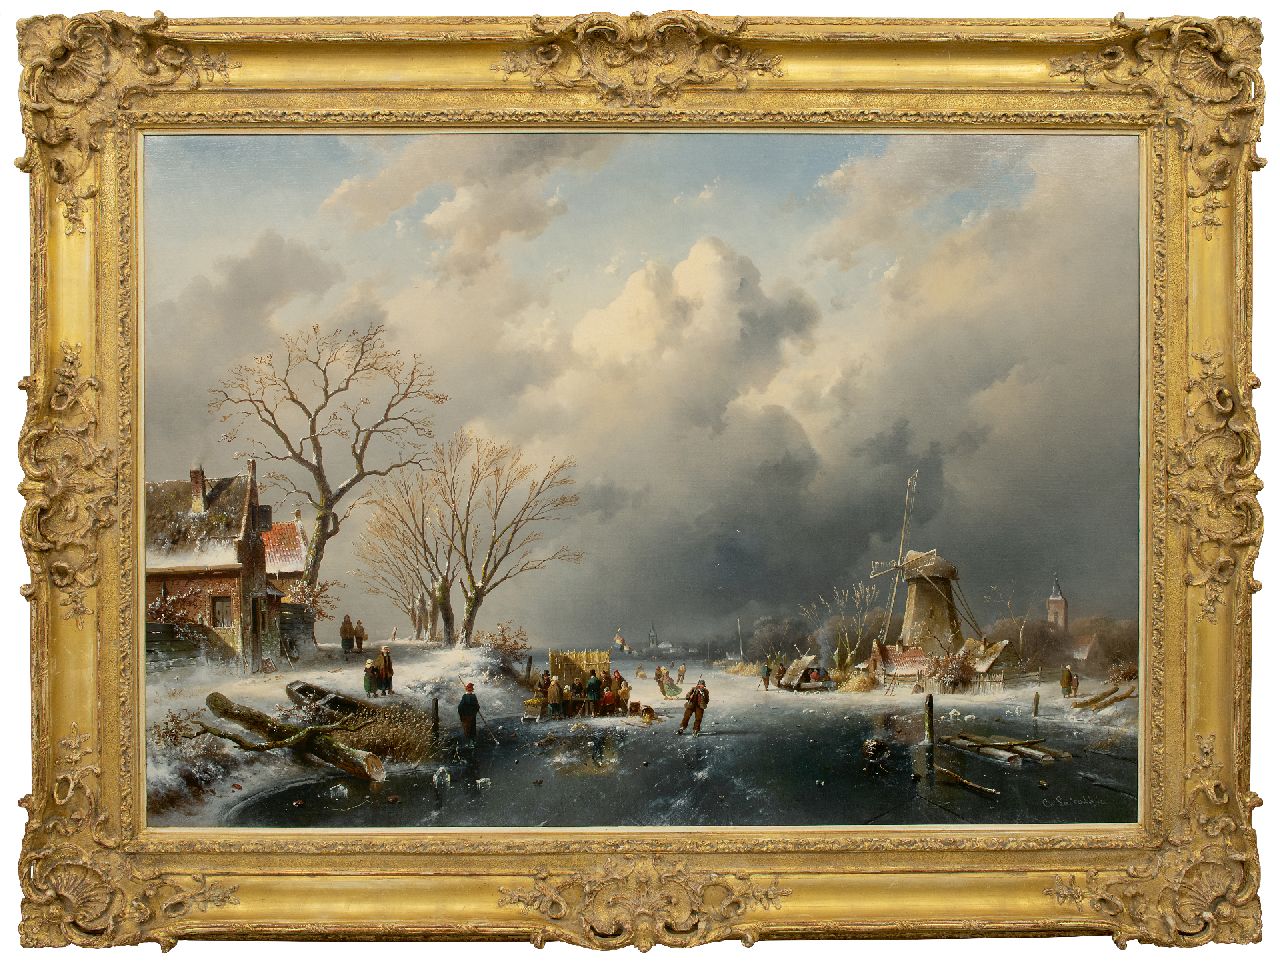 Leickert C.H.J.  | 'Charles' Henri Joseph Leickert, Hollandse winter met koek en zopie, oil on canvas 98.0 x 141.0 cm, gesigneerd rechtsonder and gedateerd 1862